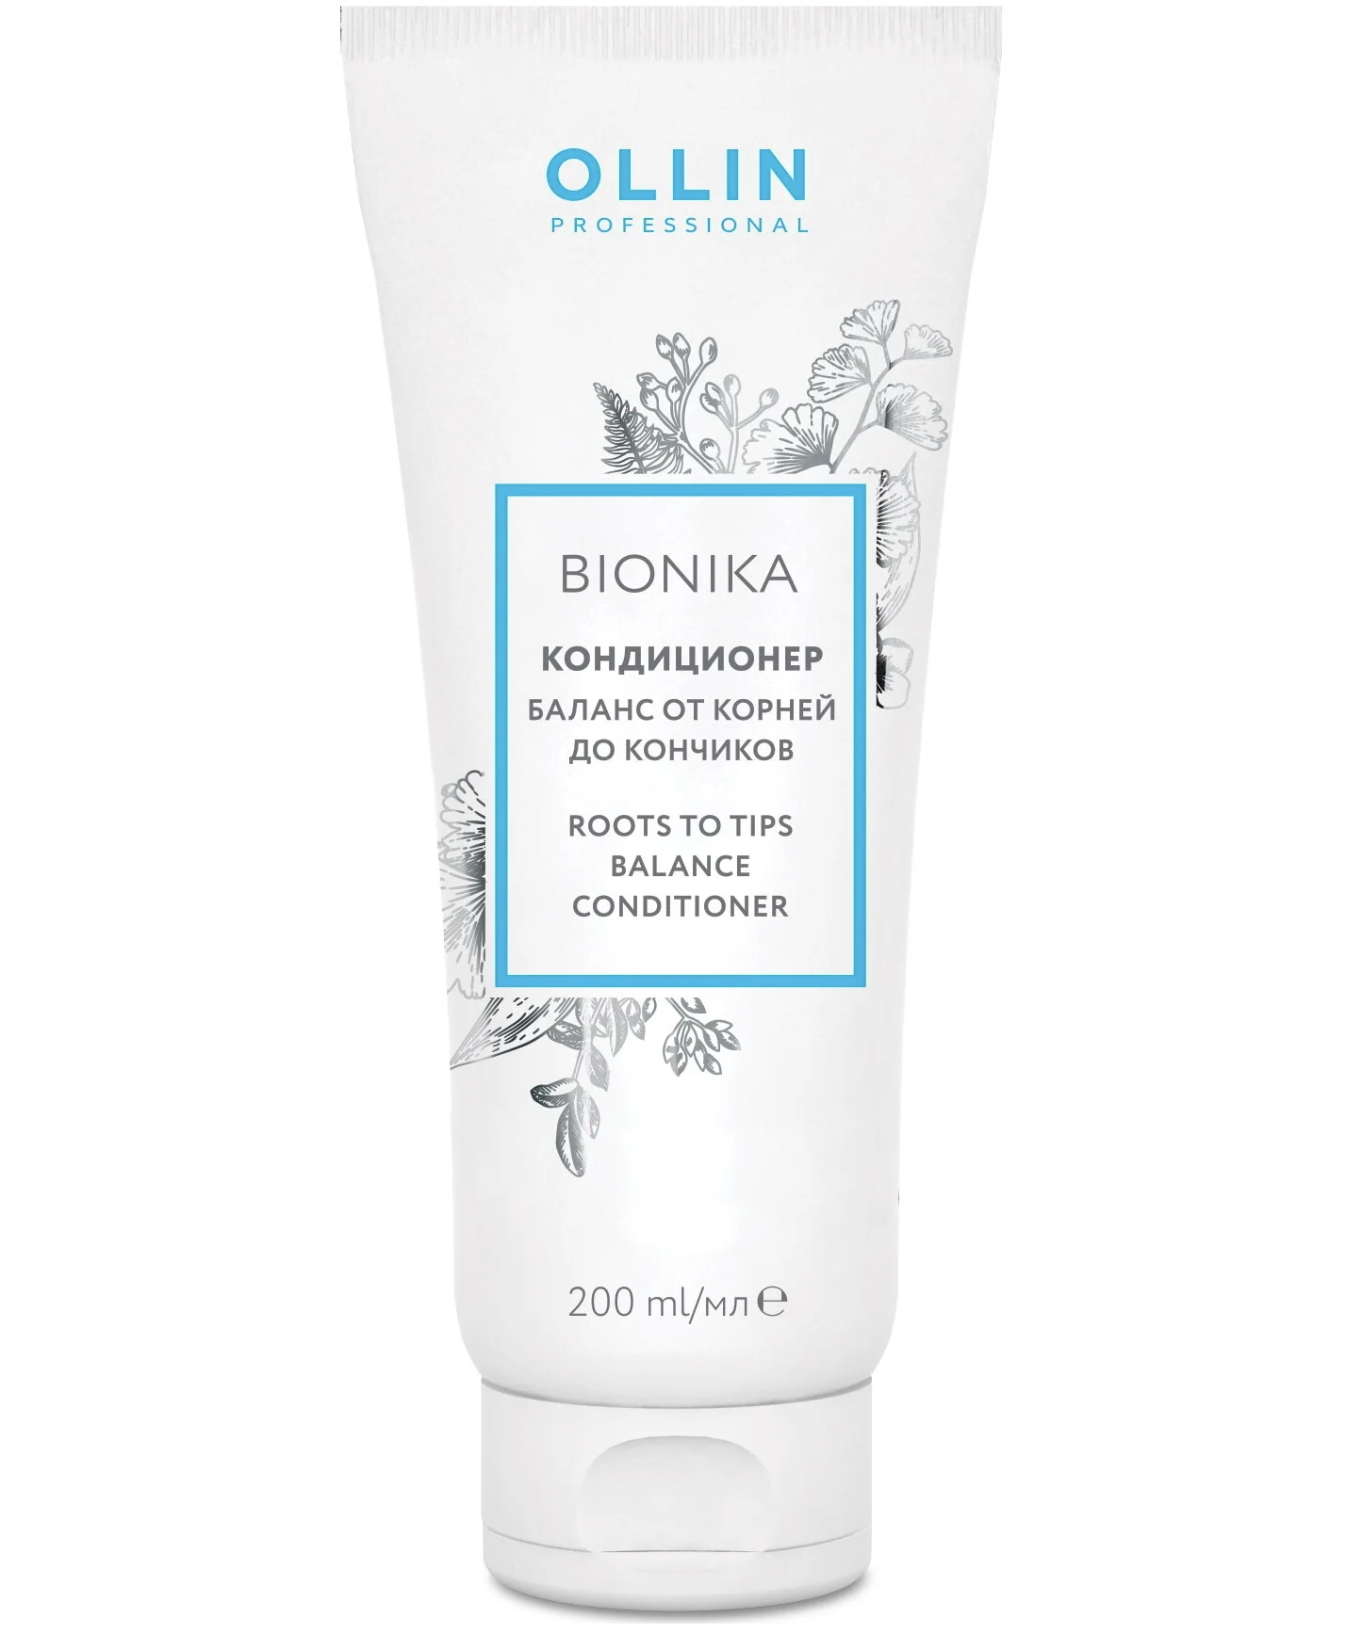 картинка Оллин / Ollin Professional - Кондиционер для волос Bionika Баланс от корней до кончиков 200 мл